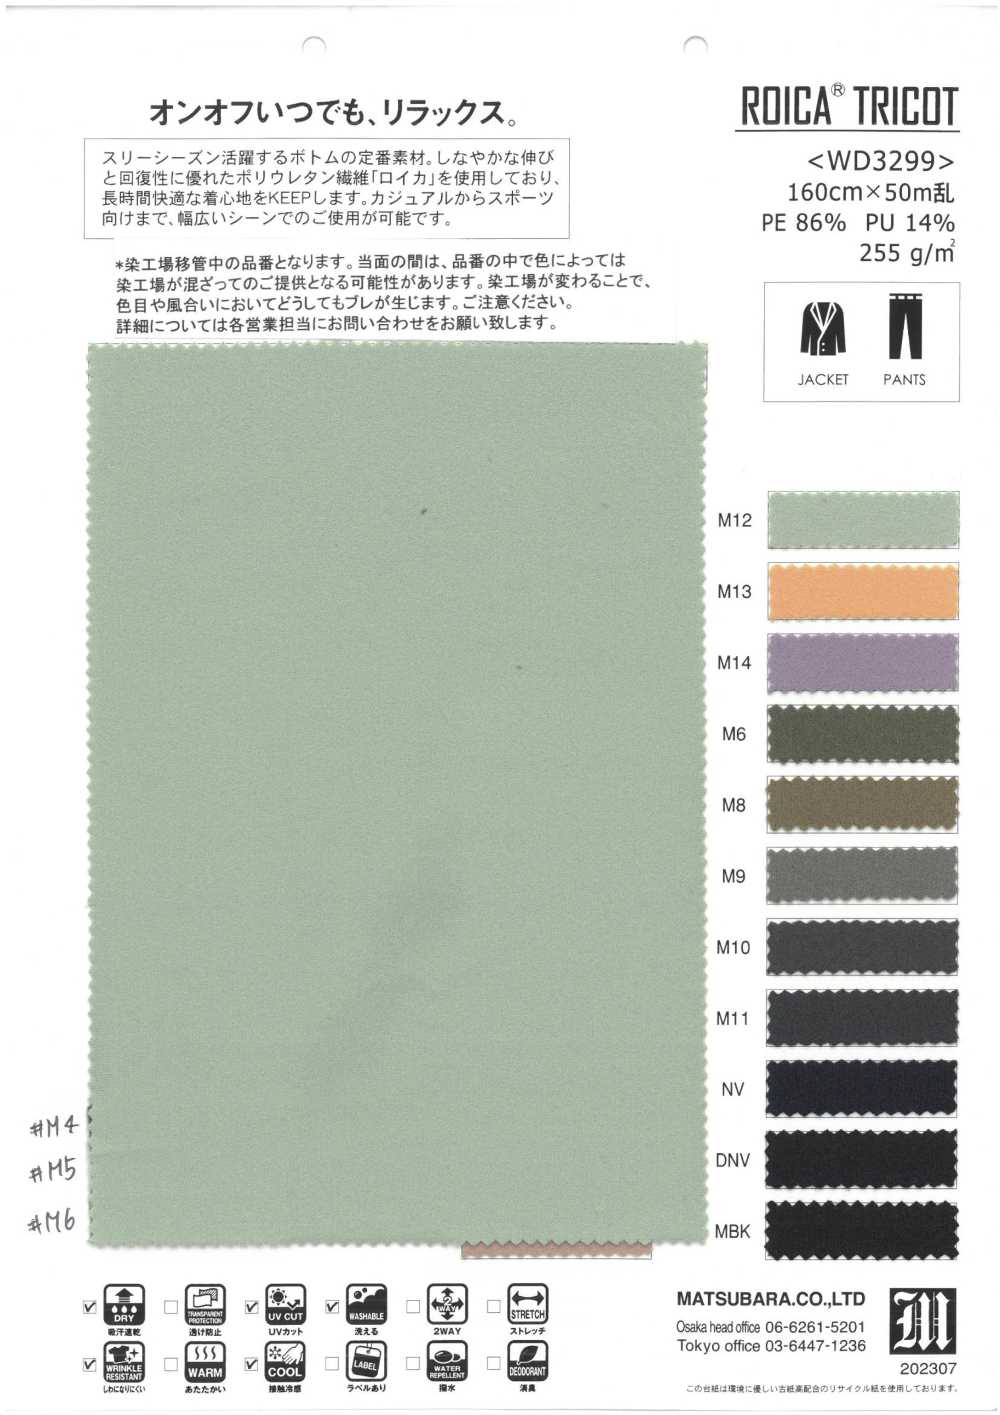 WD3299S ROICA® TRIKOT[Textilgewebe] Matsubara